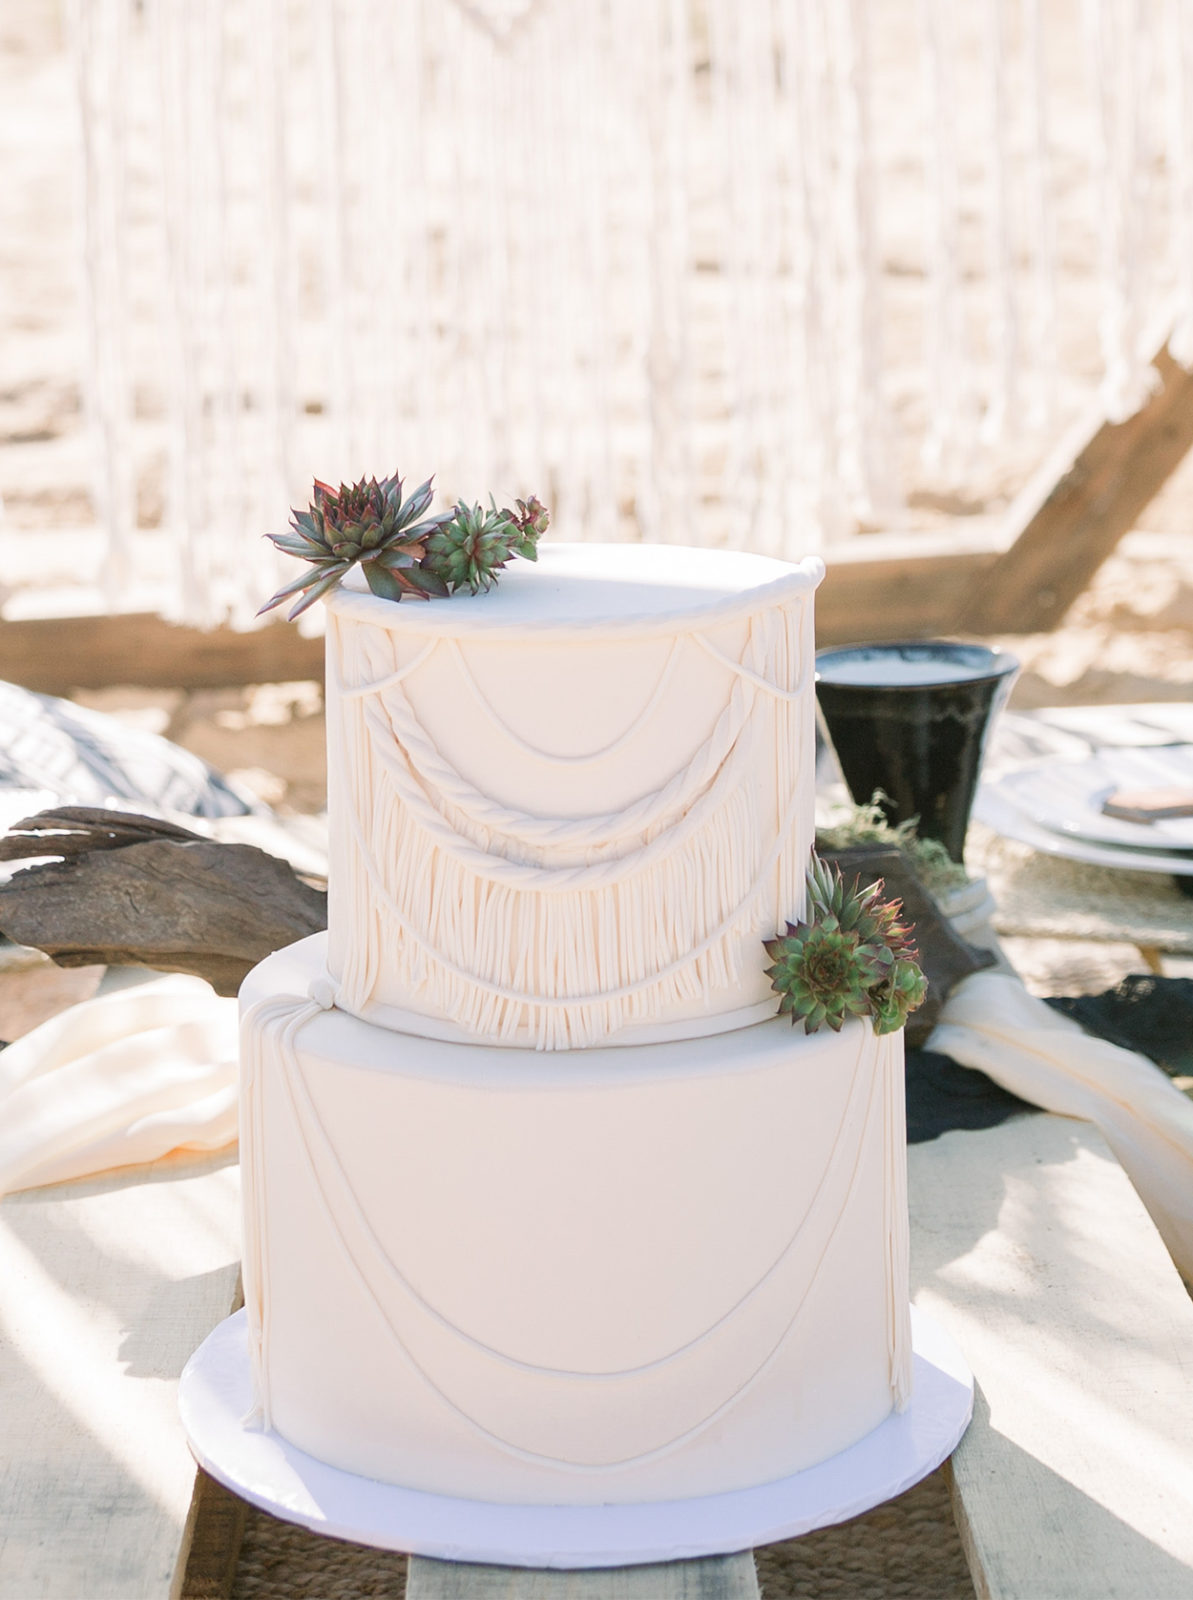 Macrame inspired wedding cake for a Western wedding day or boho bride